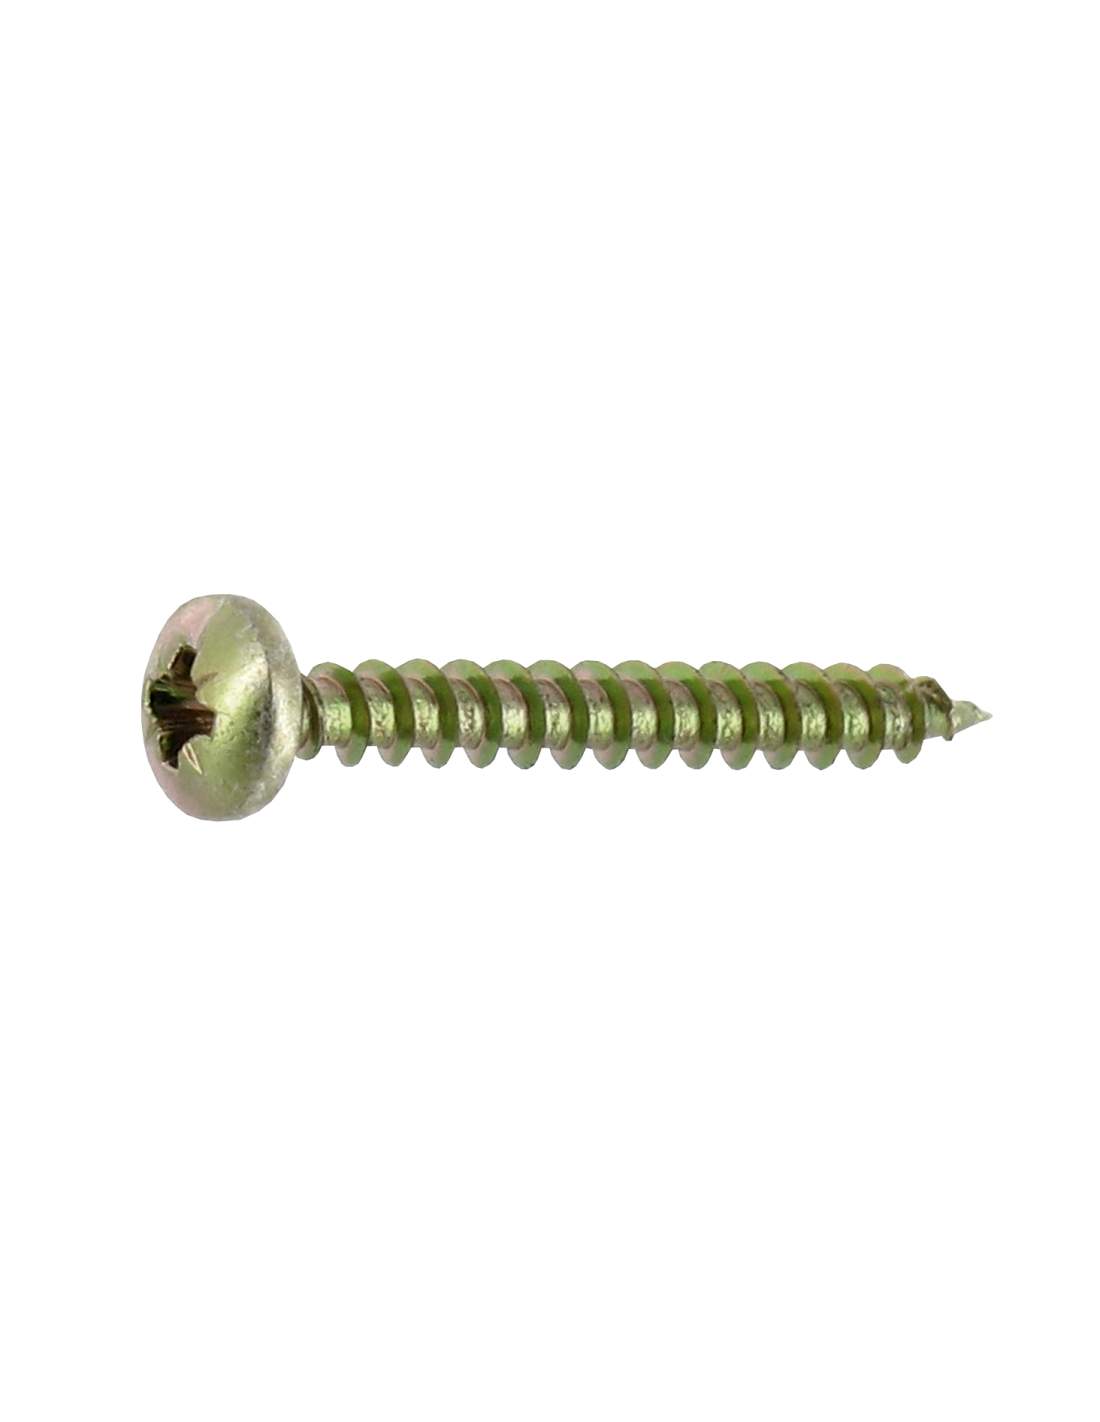 Pozidriv round-head agglomerated screws ABI 5x20, 26 pcs.